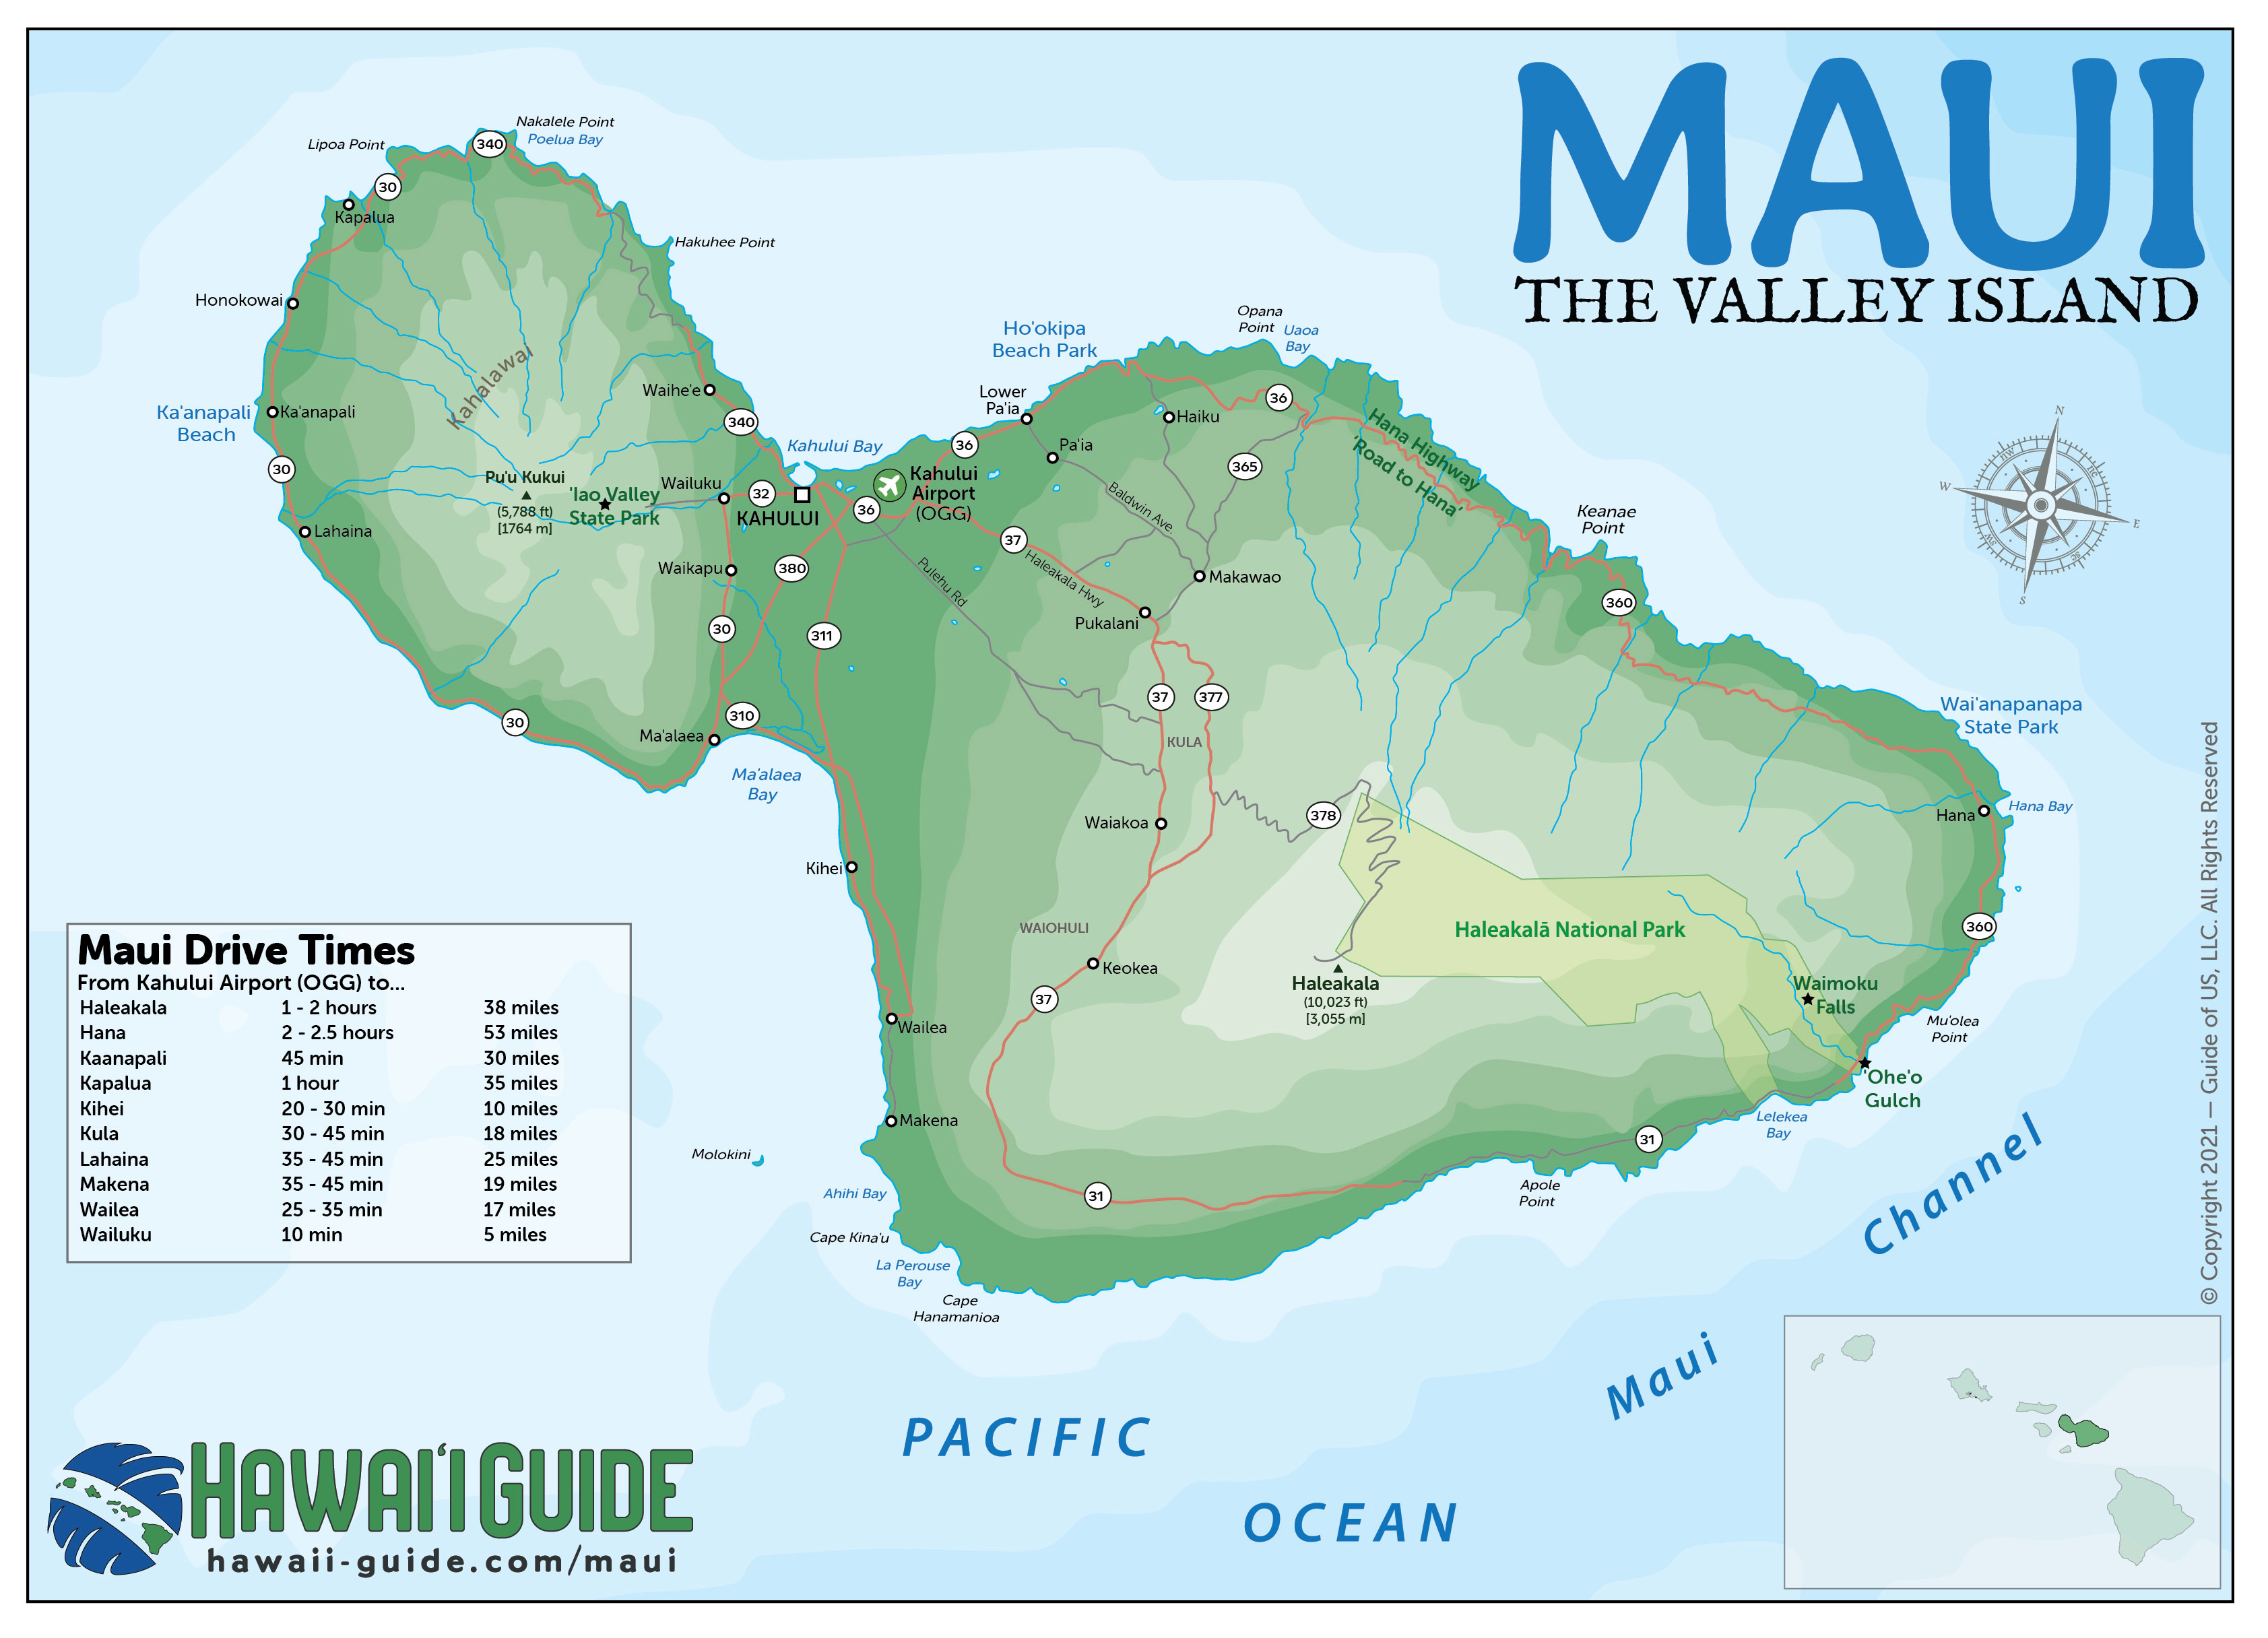 Hawaii Guide Maui Road Map V5 ?utm Source=www.hawaii Guide.com&utm Medium=referral&utm Campaign=cta Button